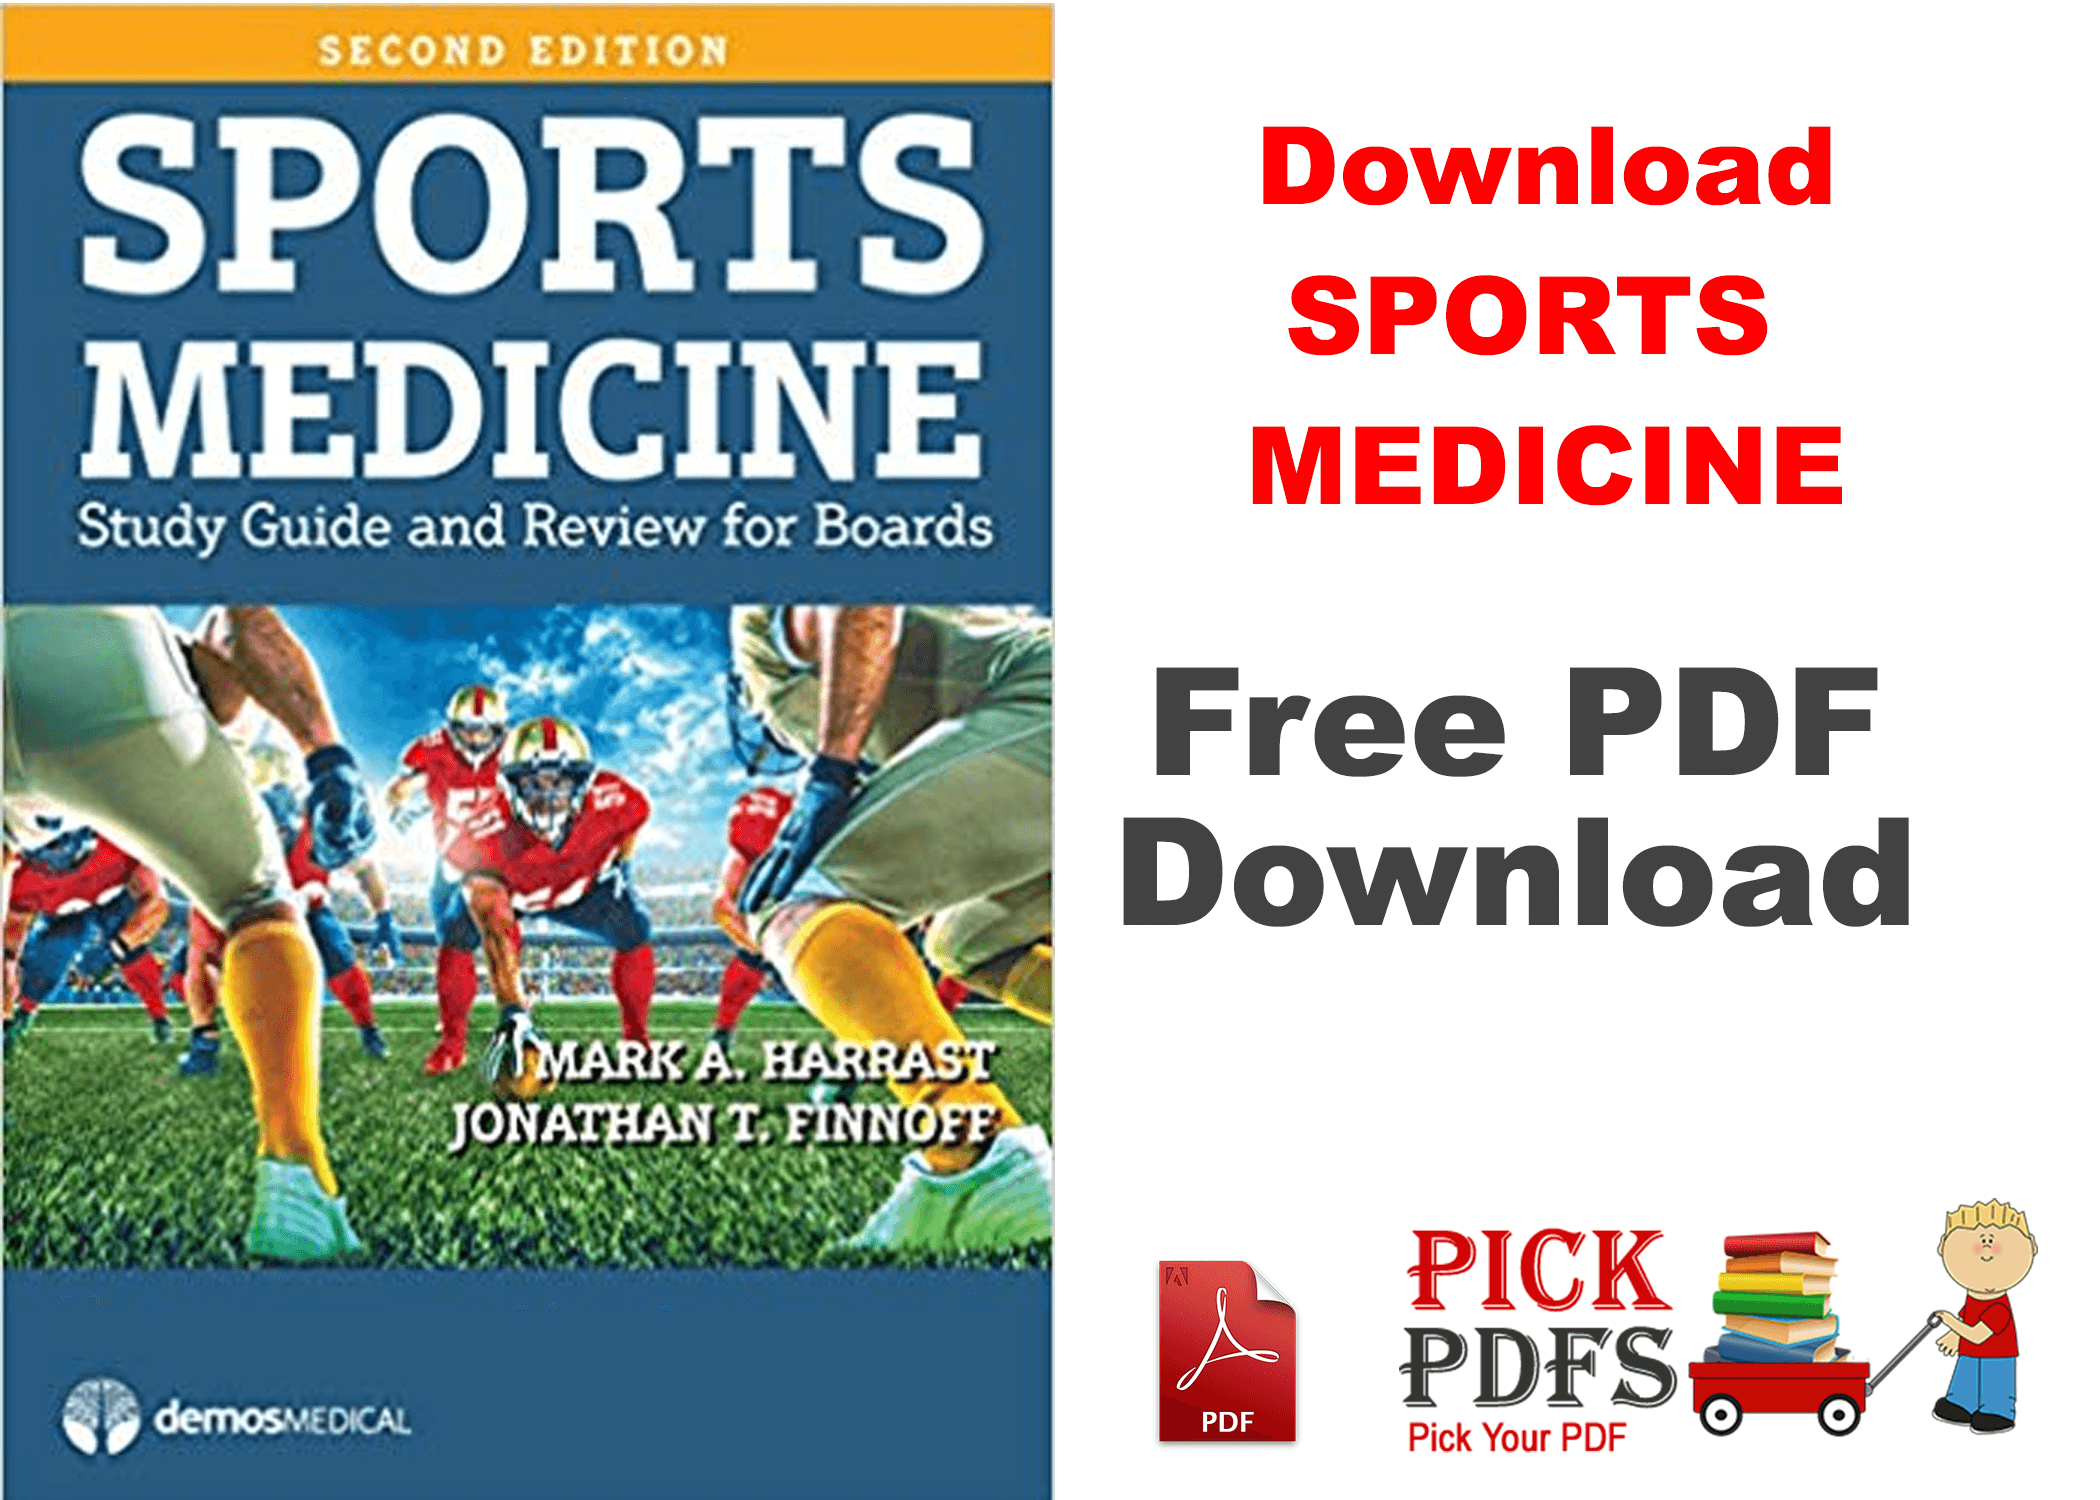 https://pickpdfs.com/sports-medicine/